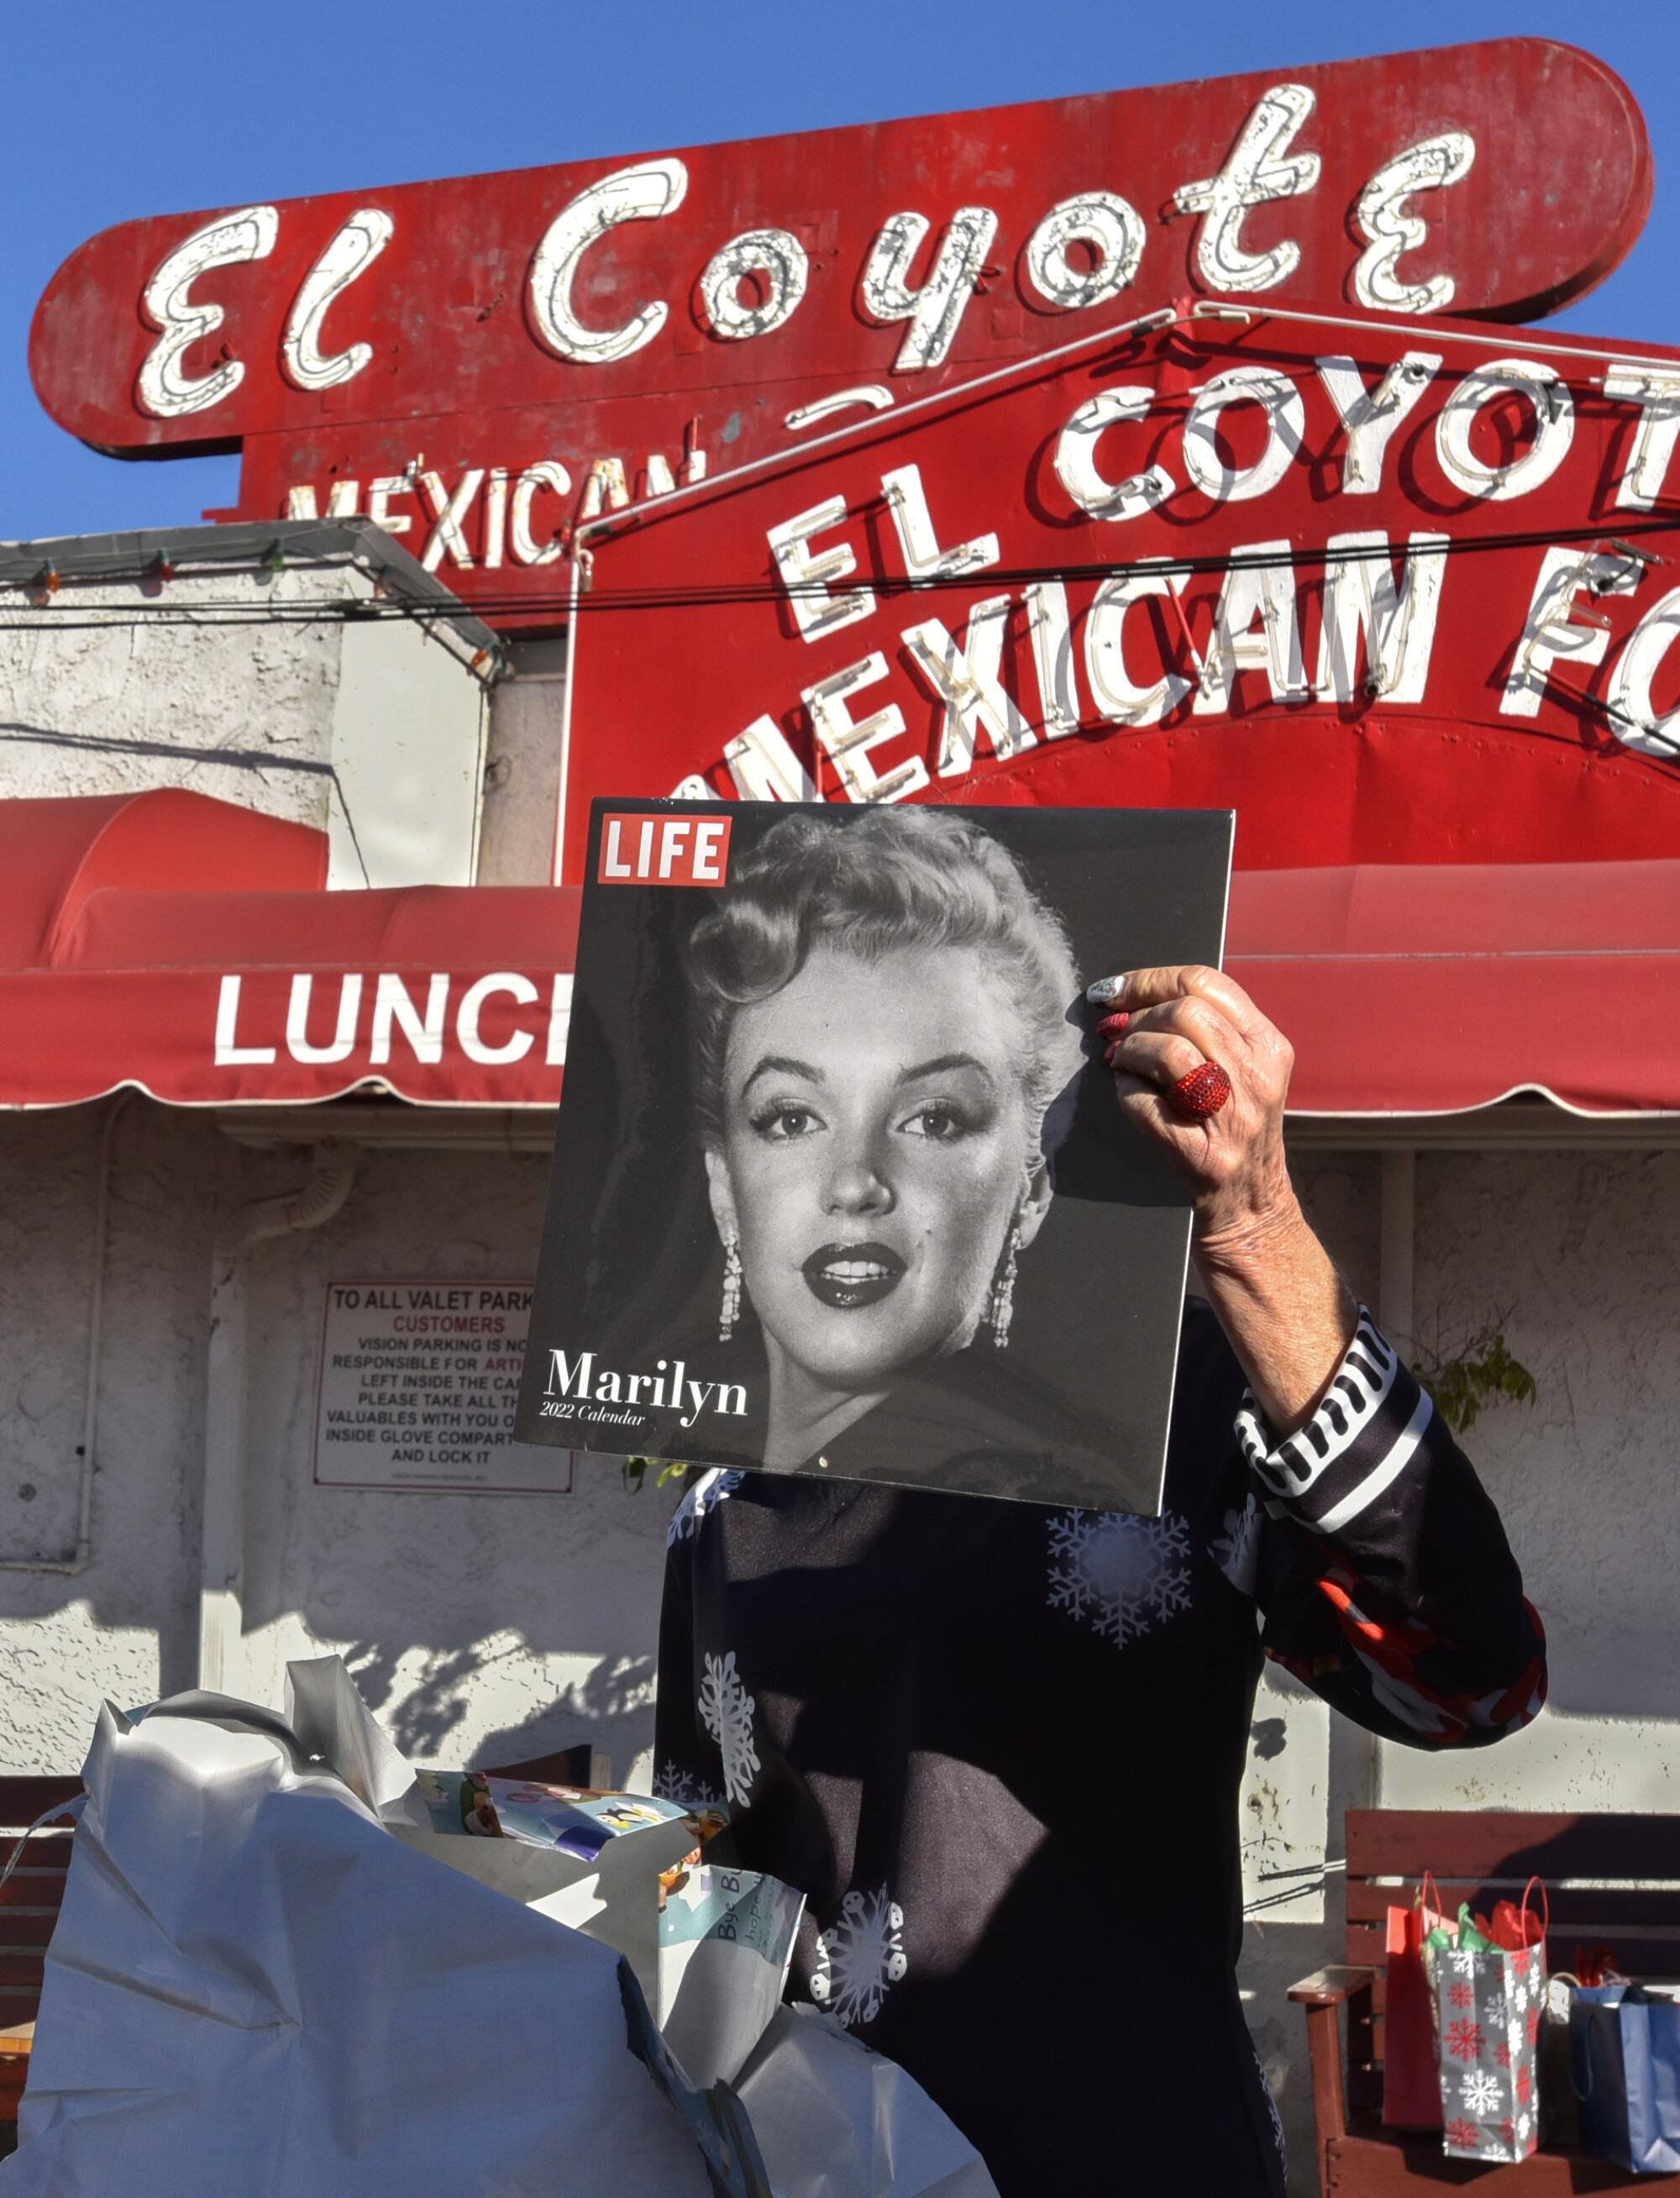 50th anniversary of Marilyn Monroe's death – Orange County Register